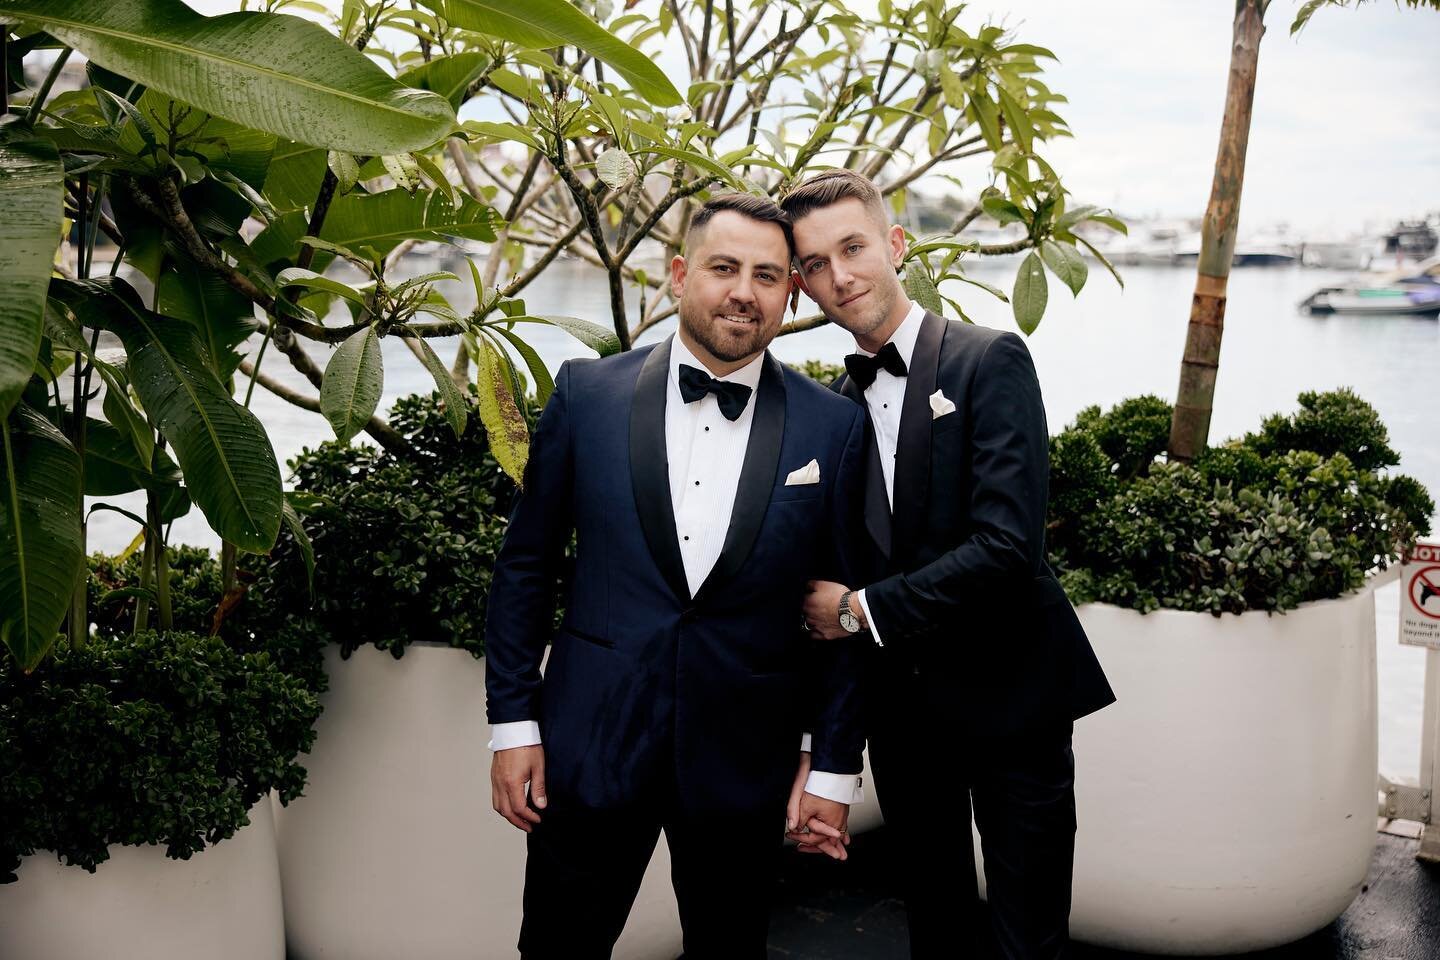 Mitch + Dave&rsquo;s beautiful wedding at @theboathouserosebay 🥂 

Photo @jamessimmonsphotography